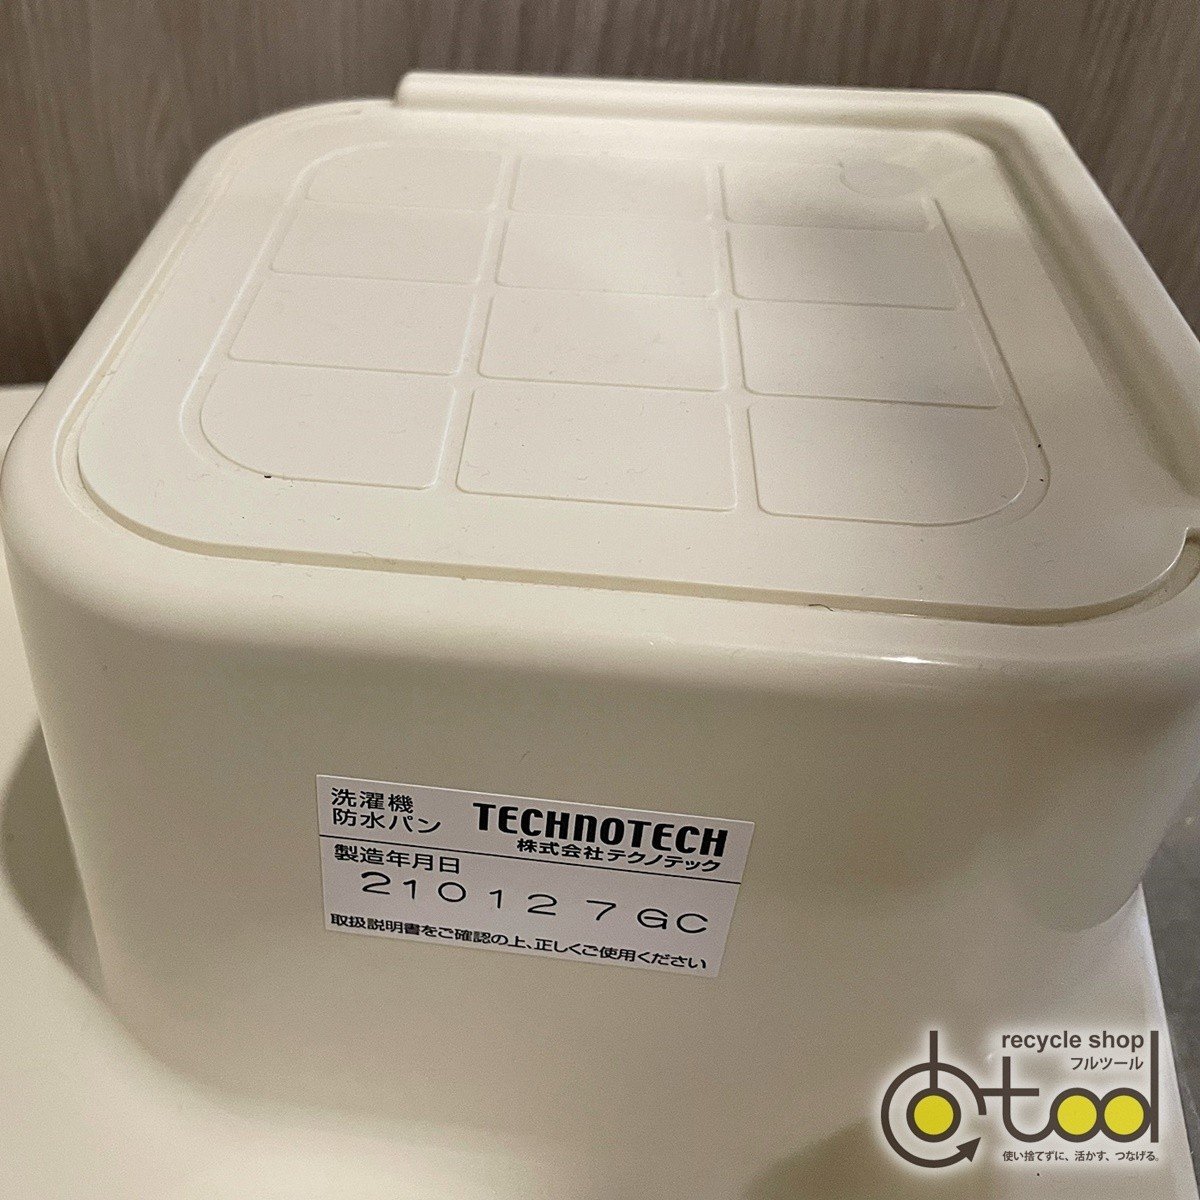 [ Osaka ] Techno Tec made washing machine pan ( waterproof bread )/ umbrella up type /2021 year made /mote Leroux m exhibition installation goods [SRA17]